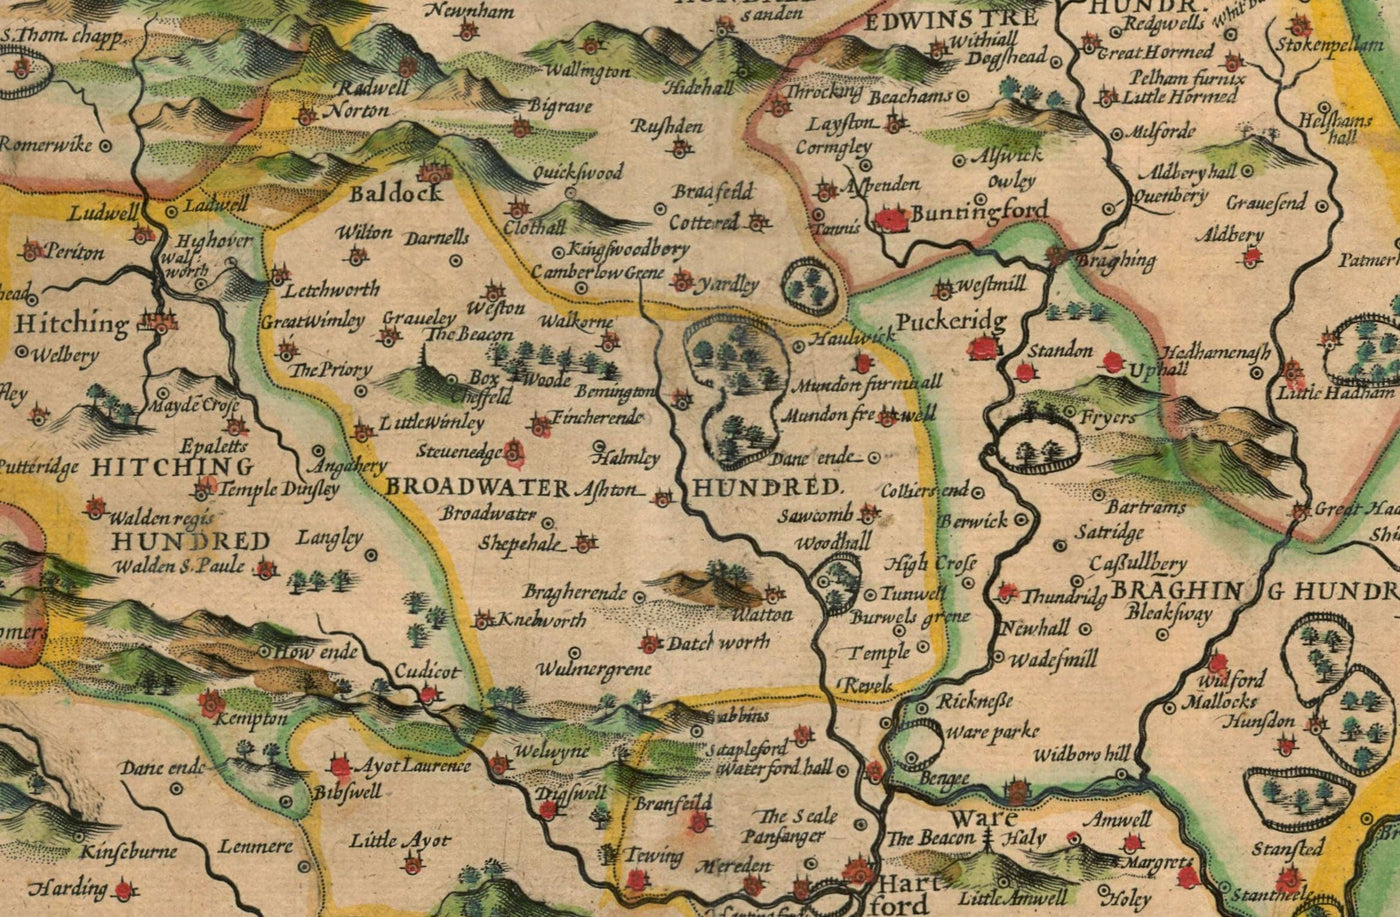 Viejo mapa de Hertfordshire en 1611 por John Speed ​​- Stevenage, St Albans, Watford, Hemel Hempstead